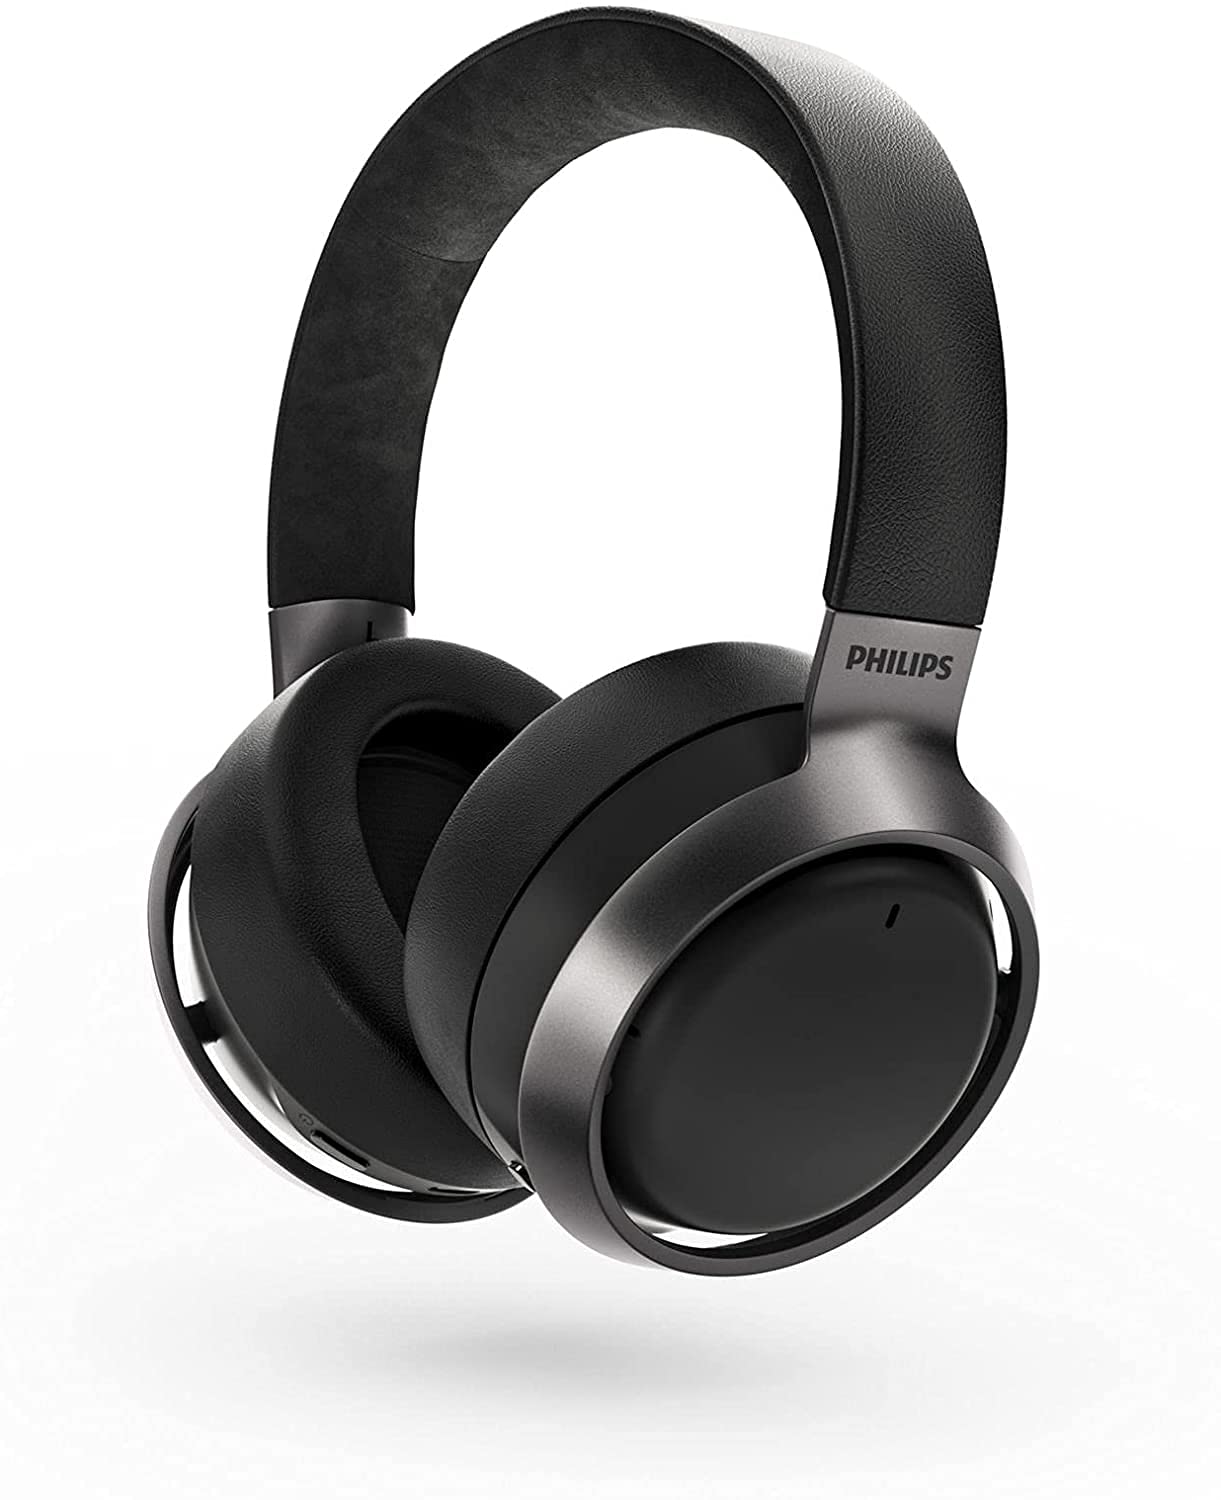 Philips Audio ANC(Active Noise Cancellation Pro+) 및 Bluetooth 멀티포인트 연결 기능을 갖춘 필립스 Fidelio L3 플래그십 오버이어 무선 헤드폰